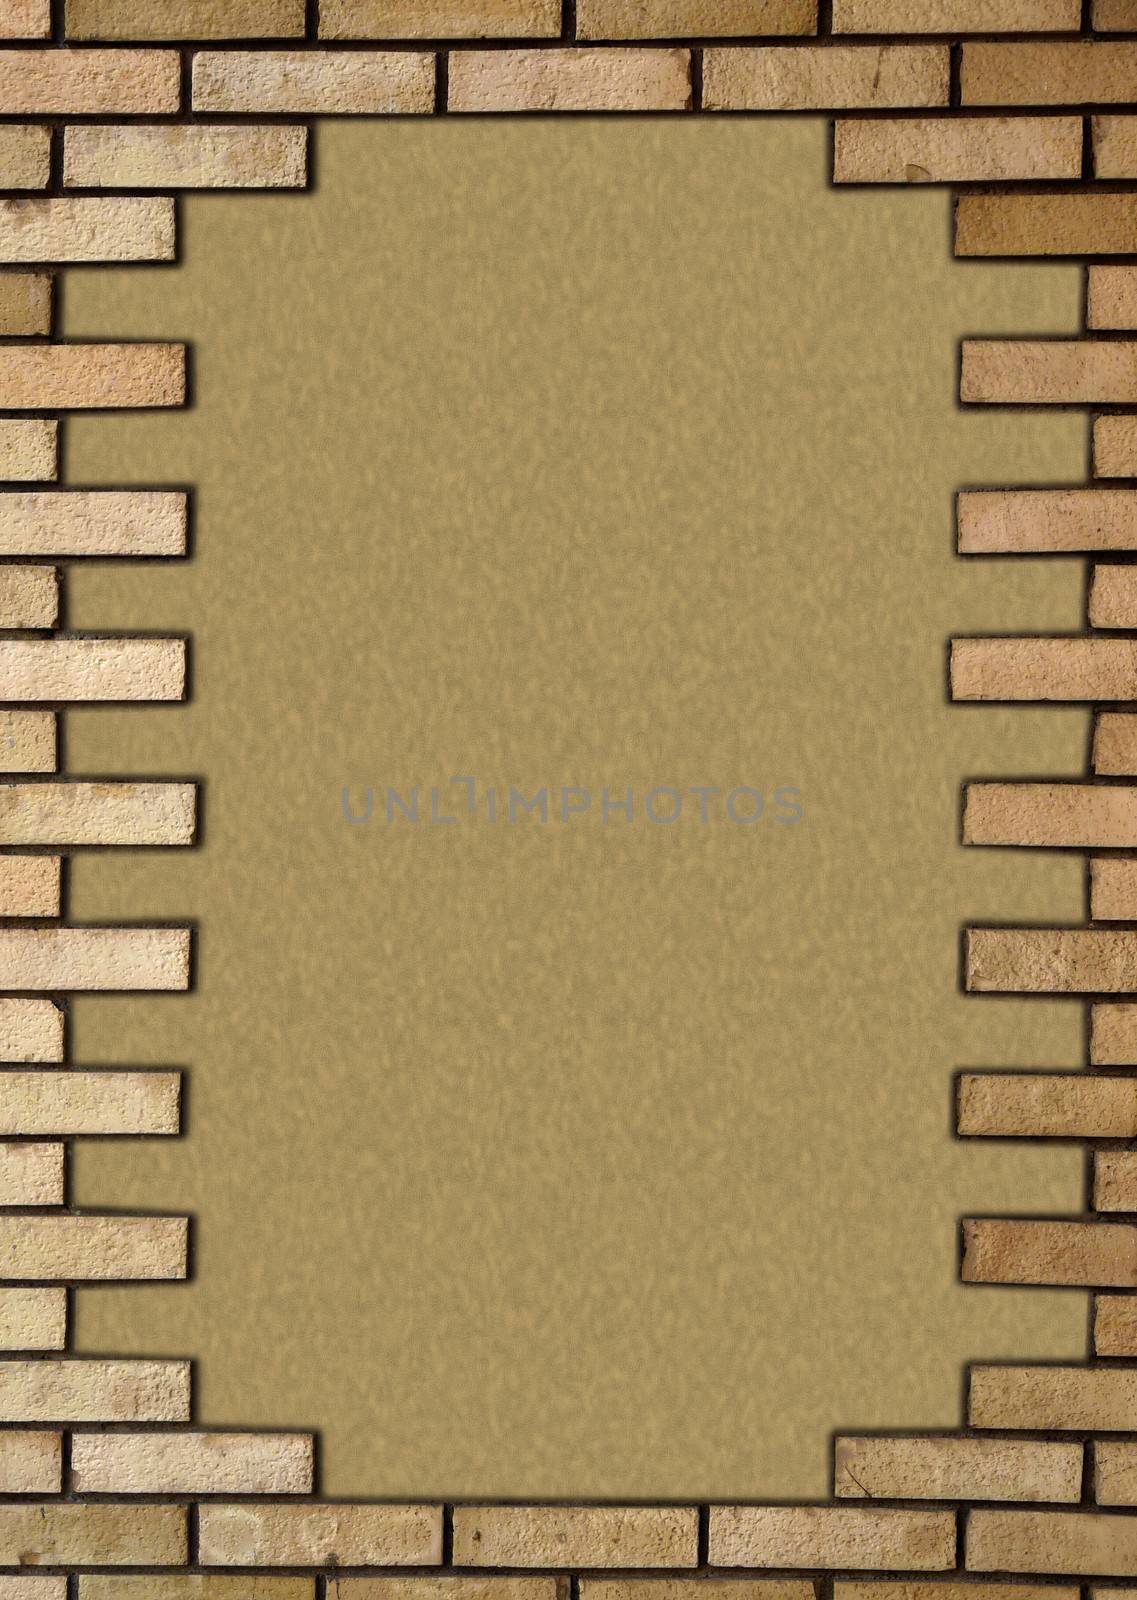 Brick wall horizontally in the frame